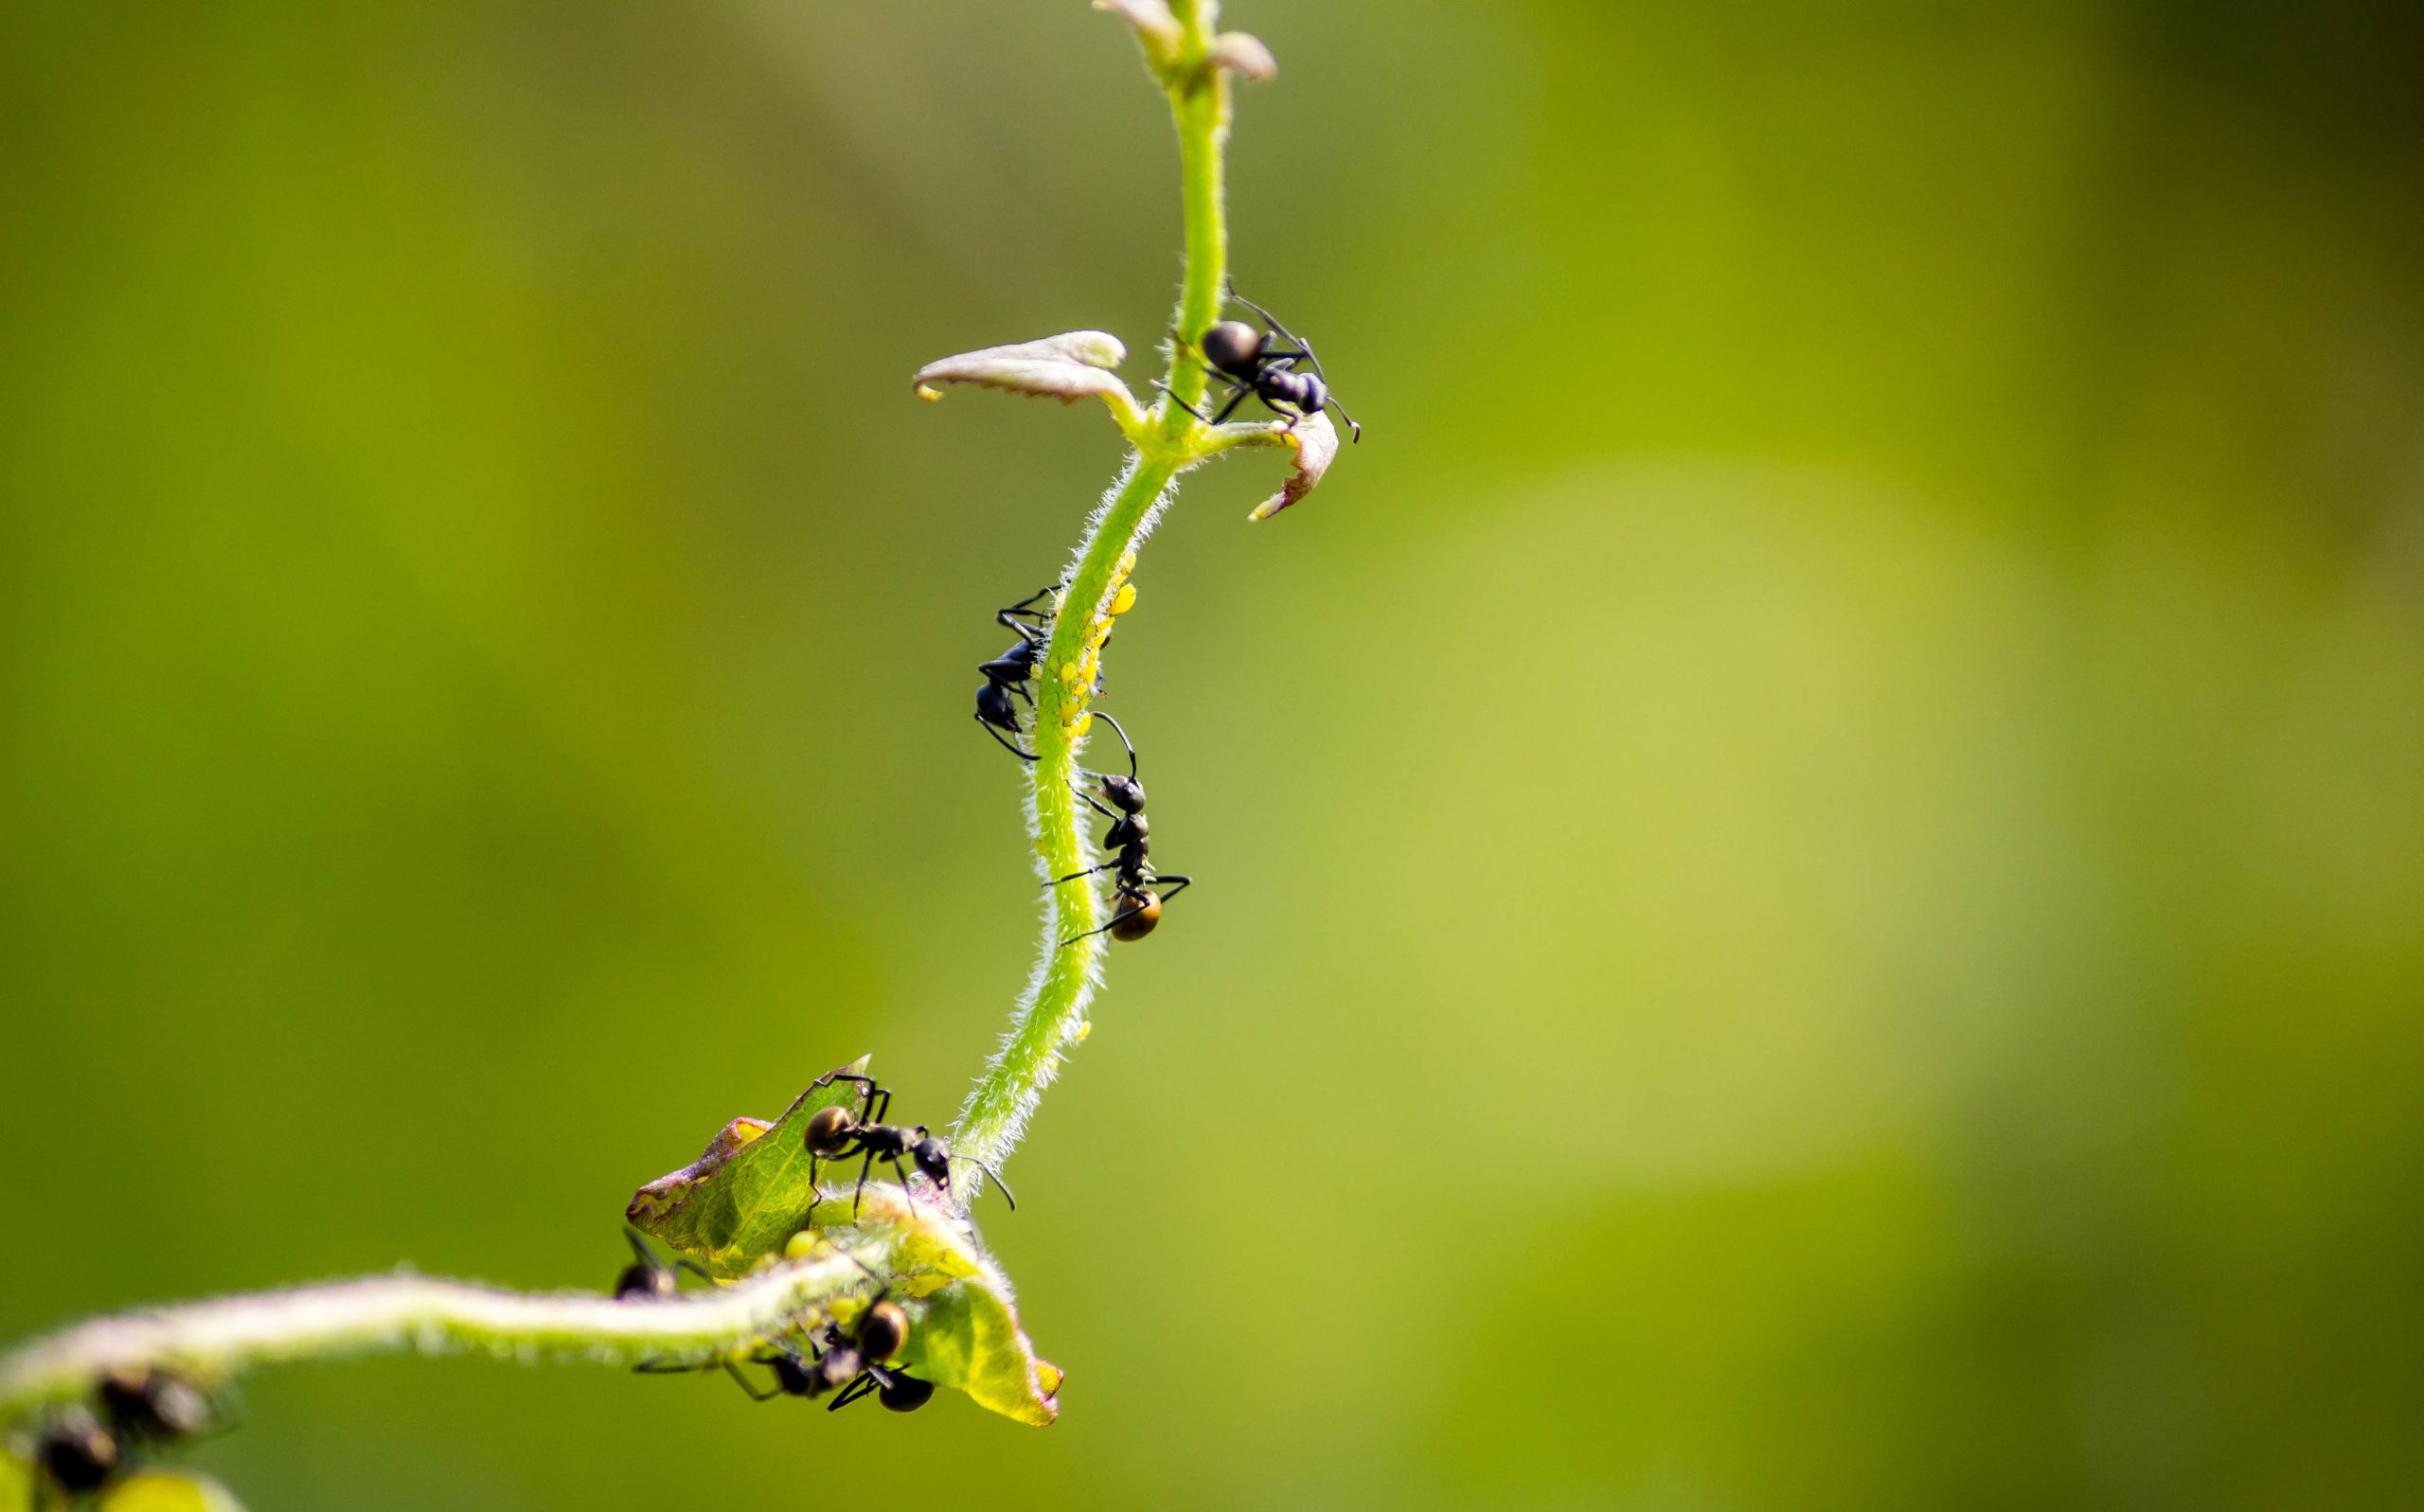 Ant on plant leaf